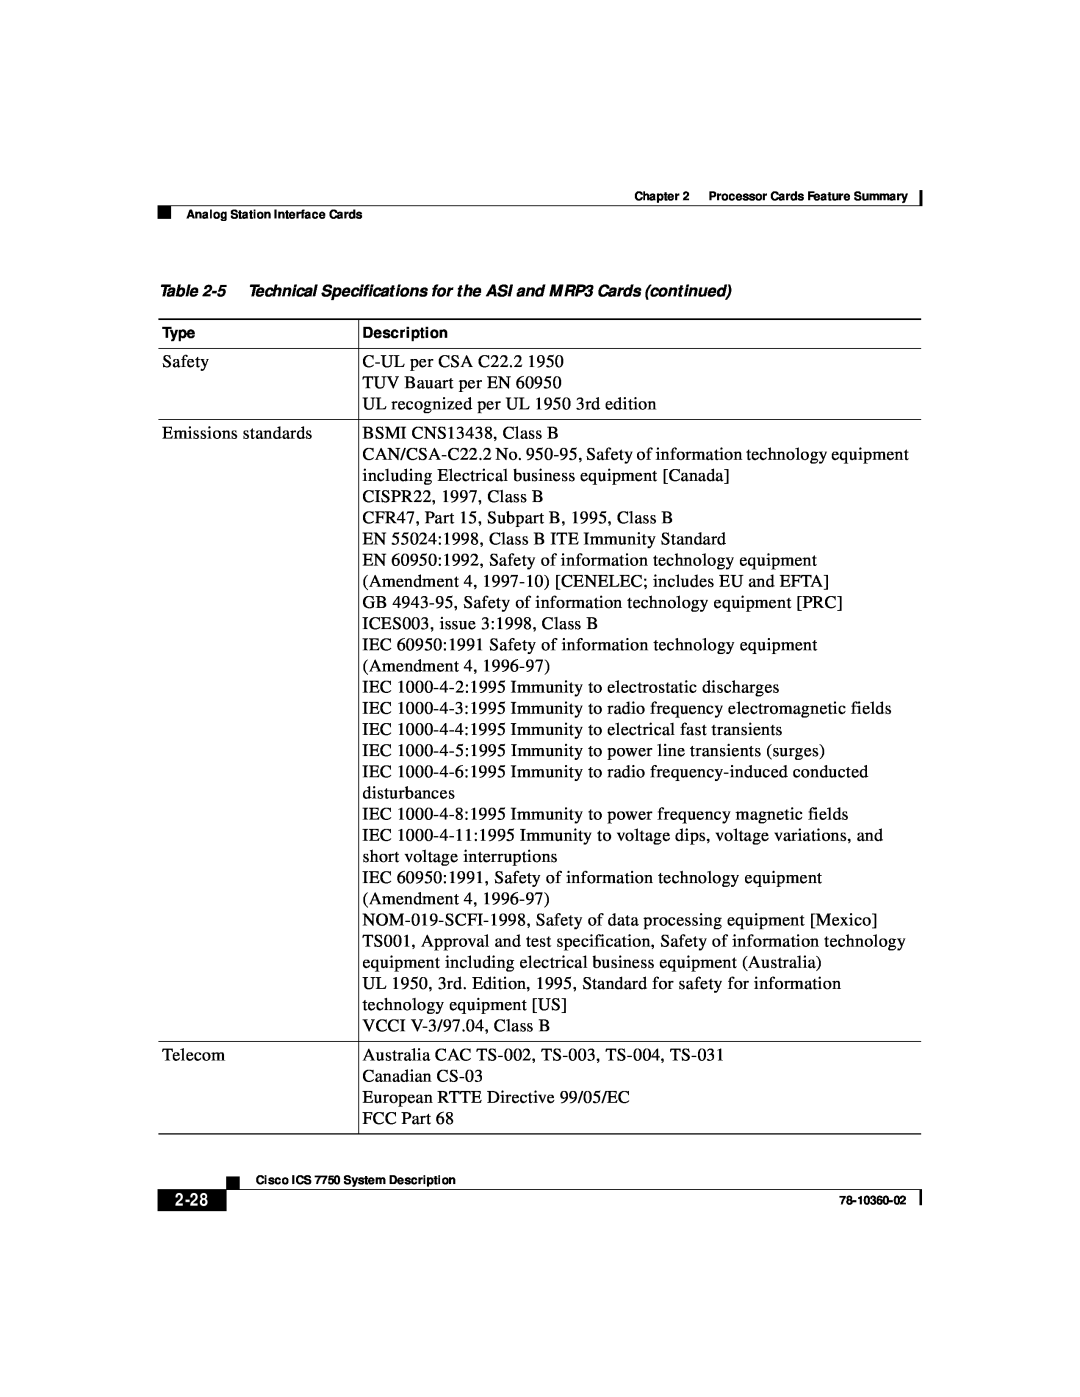 Cisco Systems ICS-7750 manual Type, Description, 2-28 